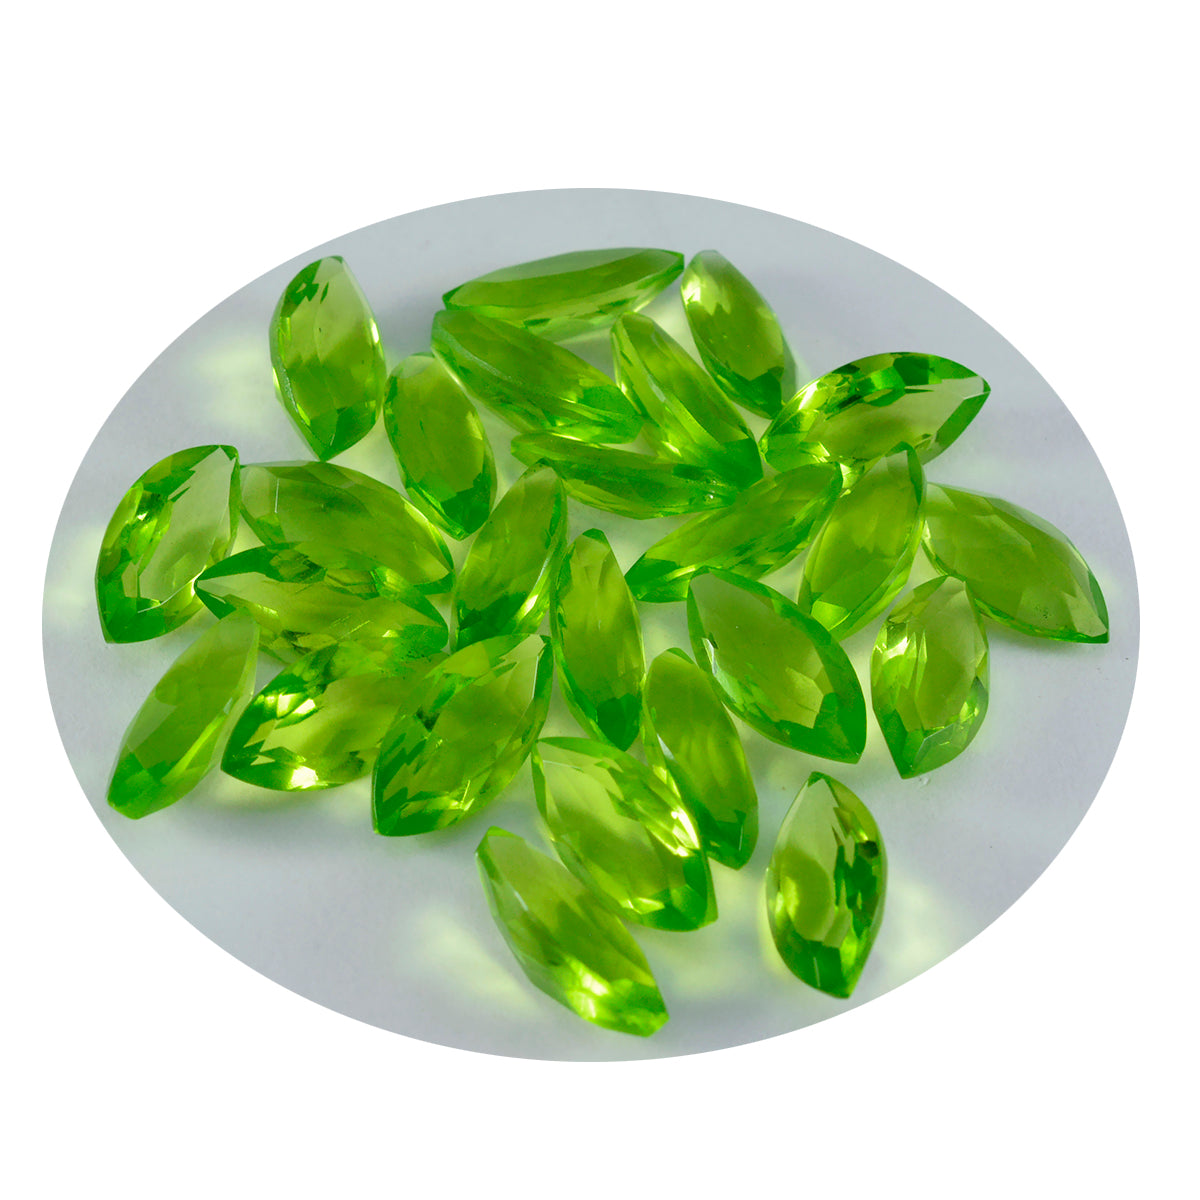 riyogems 1 st grön peridot cz facetterad 5x10 mm markis form a+ kvalitet lösa ädelstenar